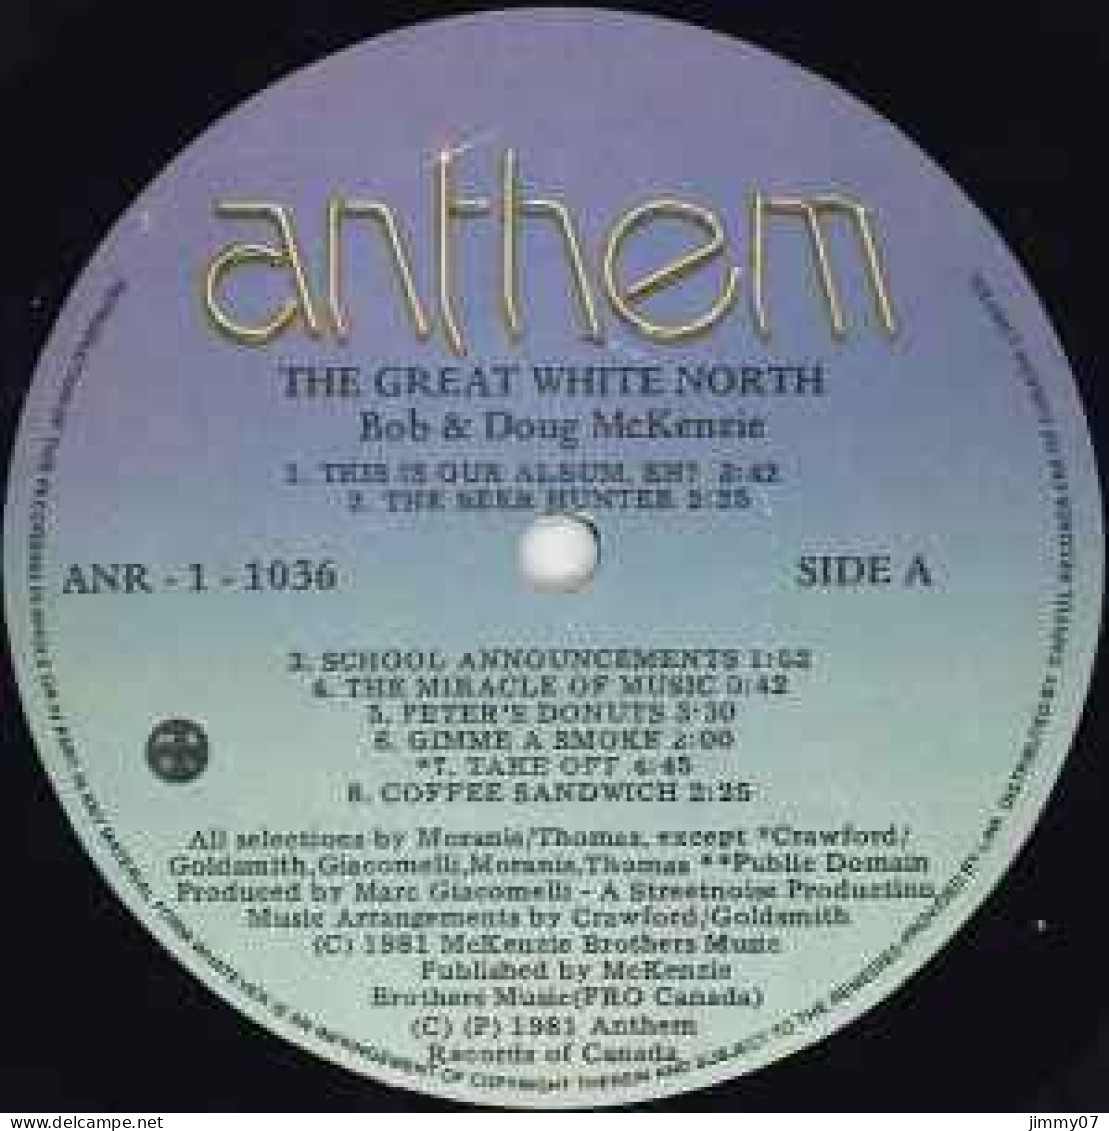 Bob & Doug McKenzie - Great White North (LP, Album) - Cómica